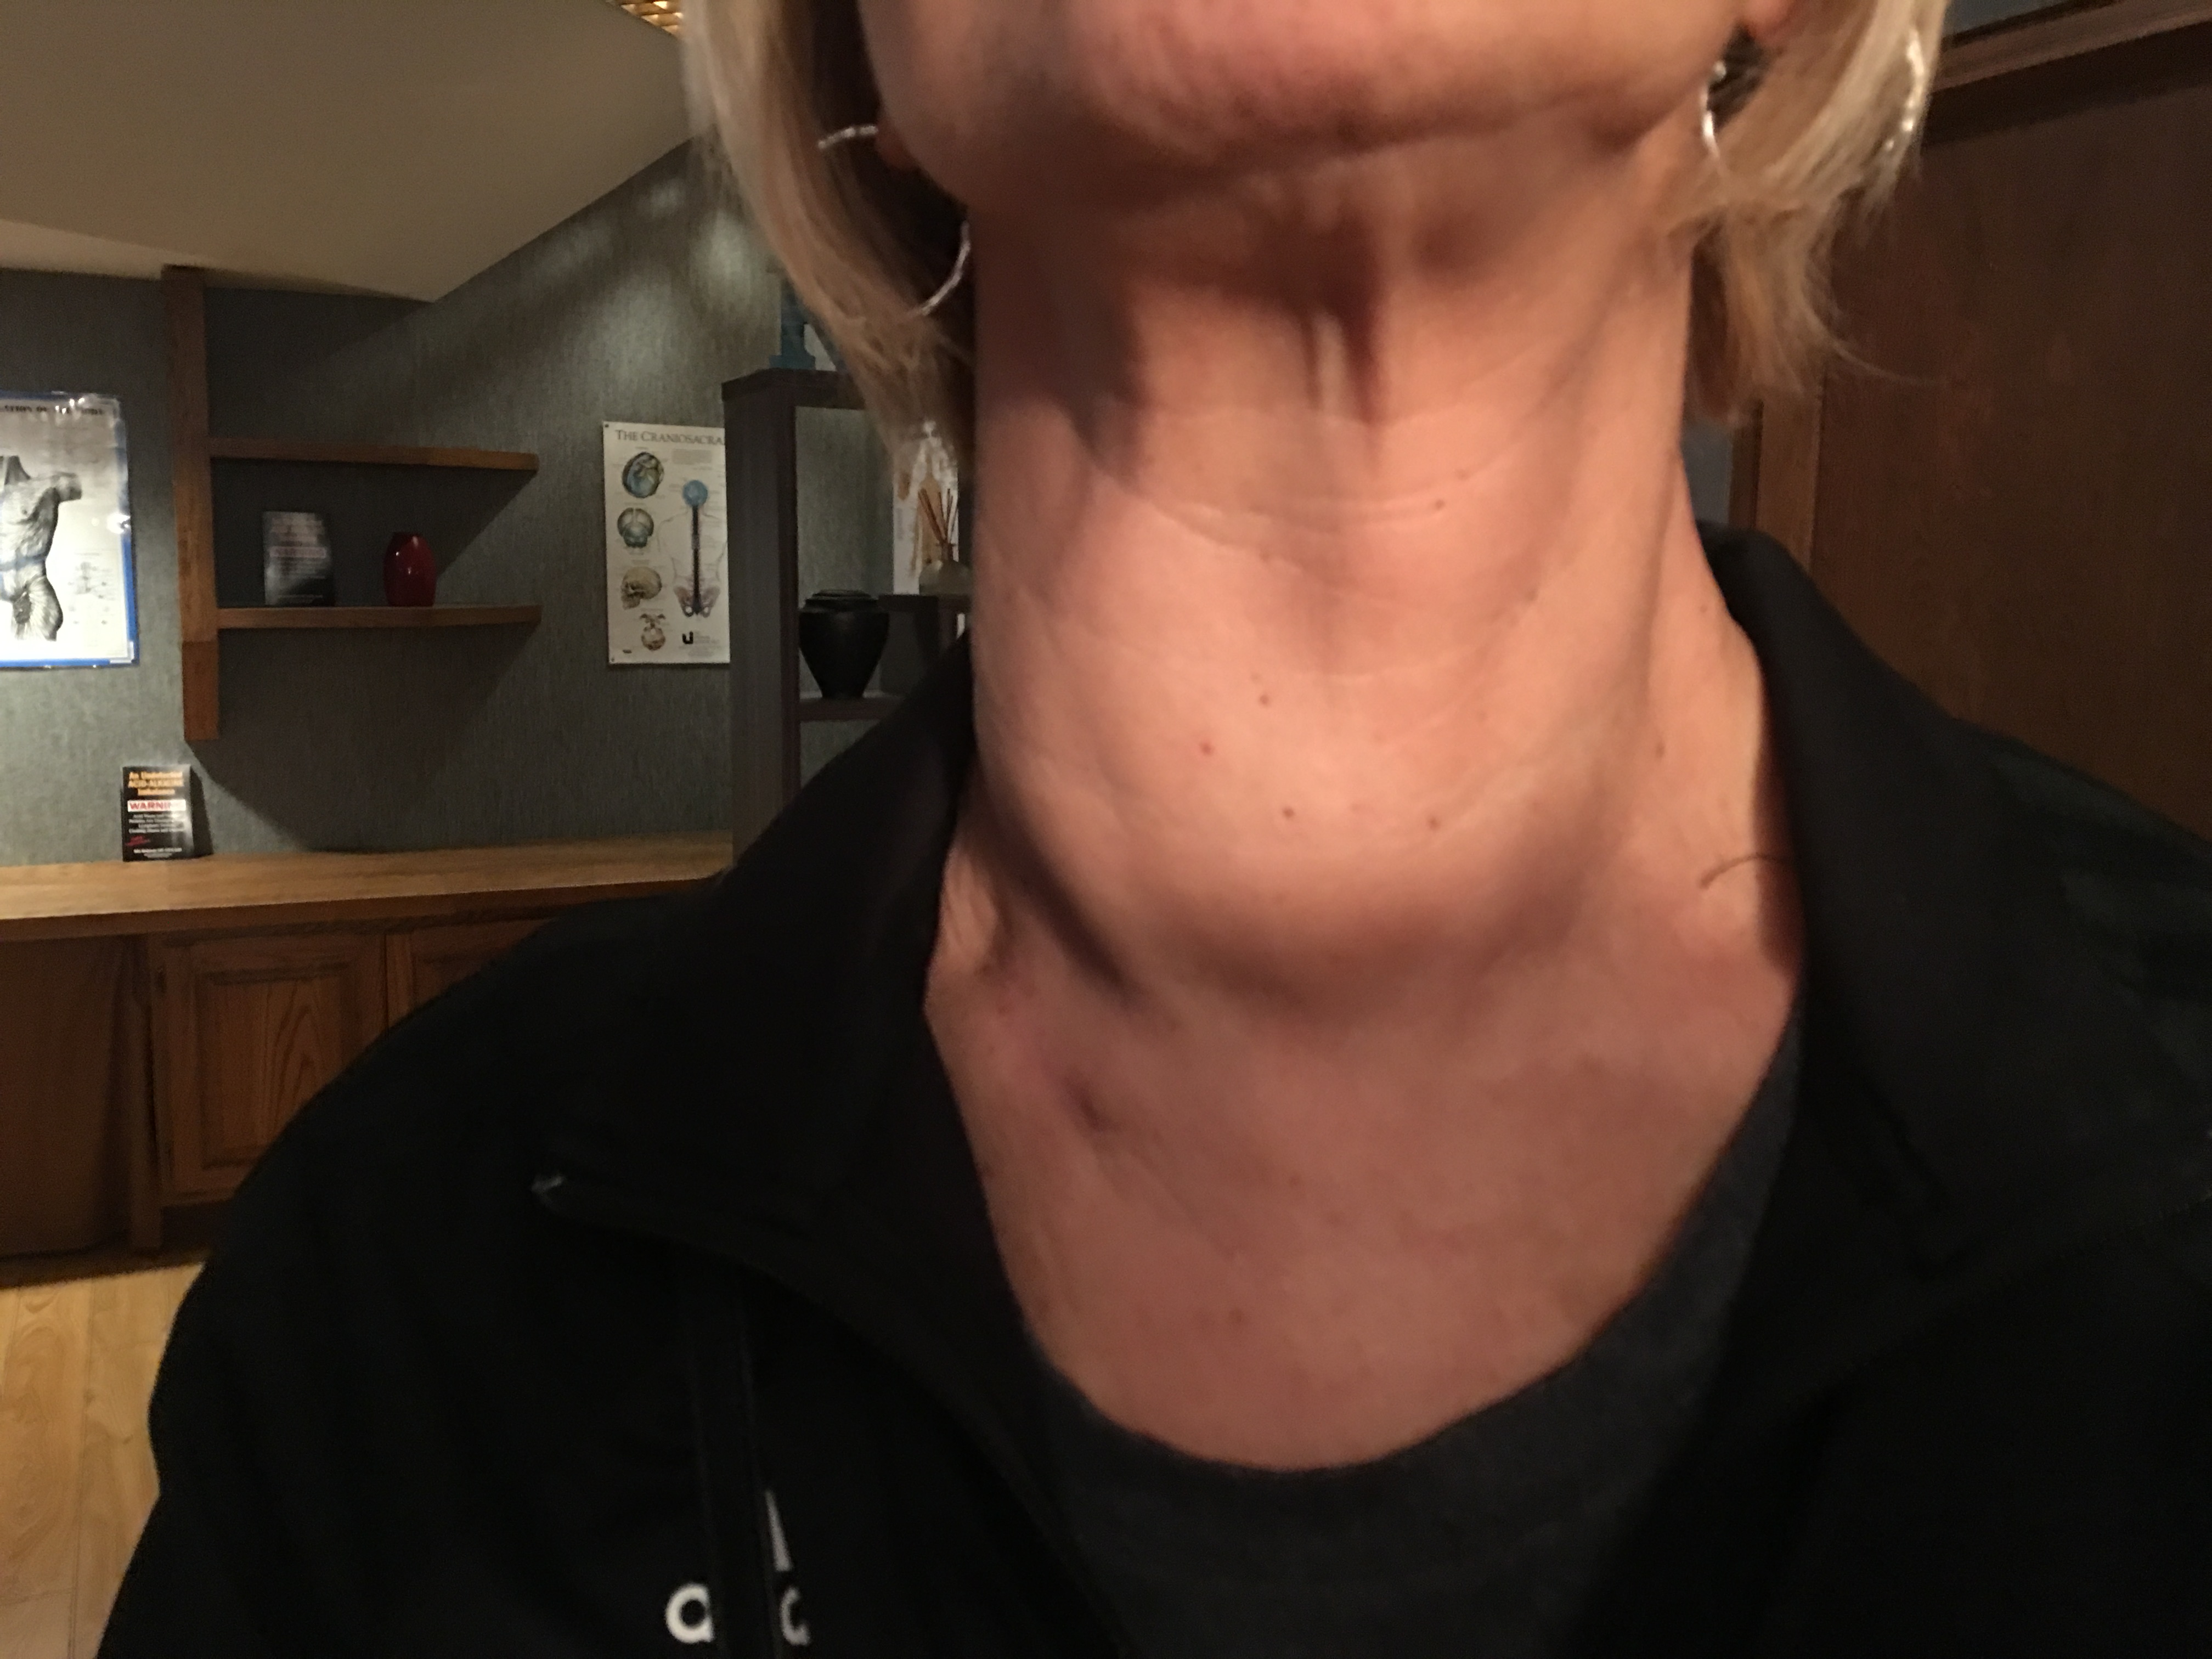 lymph node on back of neck swollen